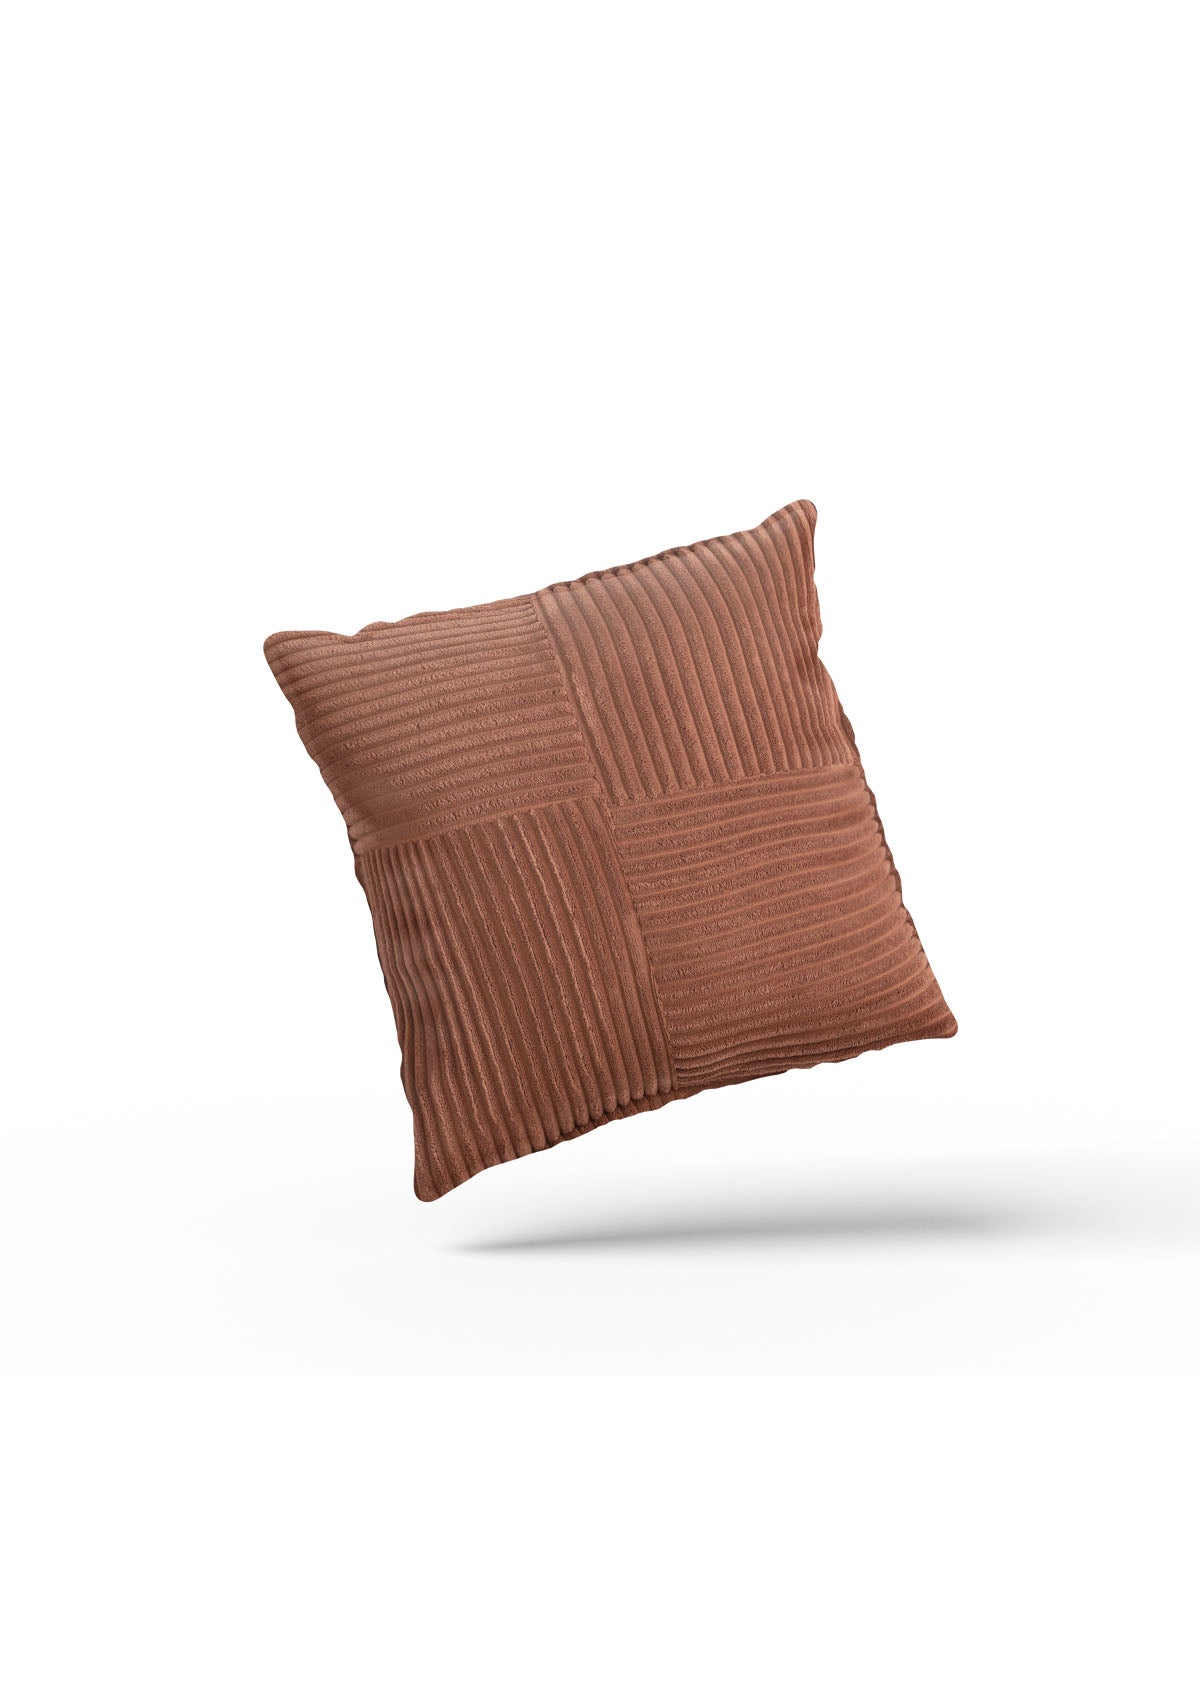 Inviting rust coloured corduroy cushion with hidden zipper closure